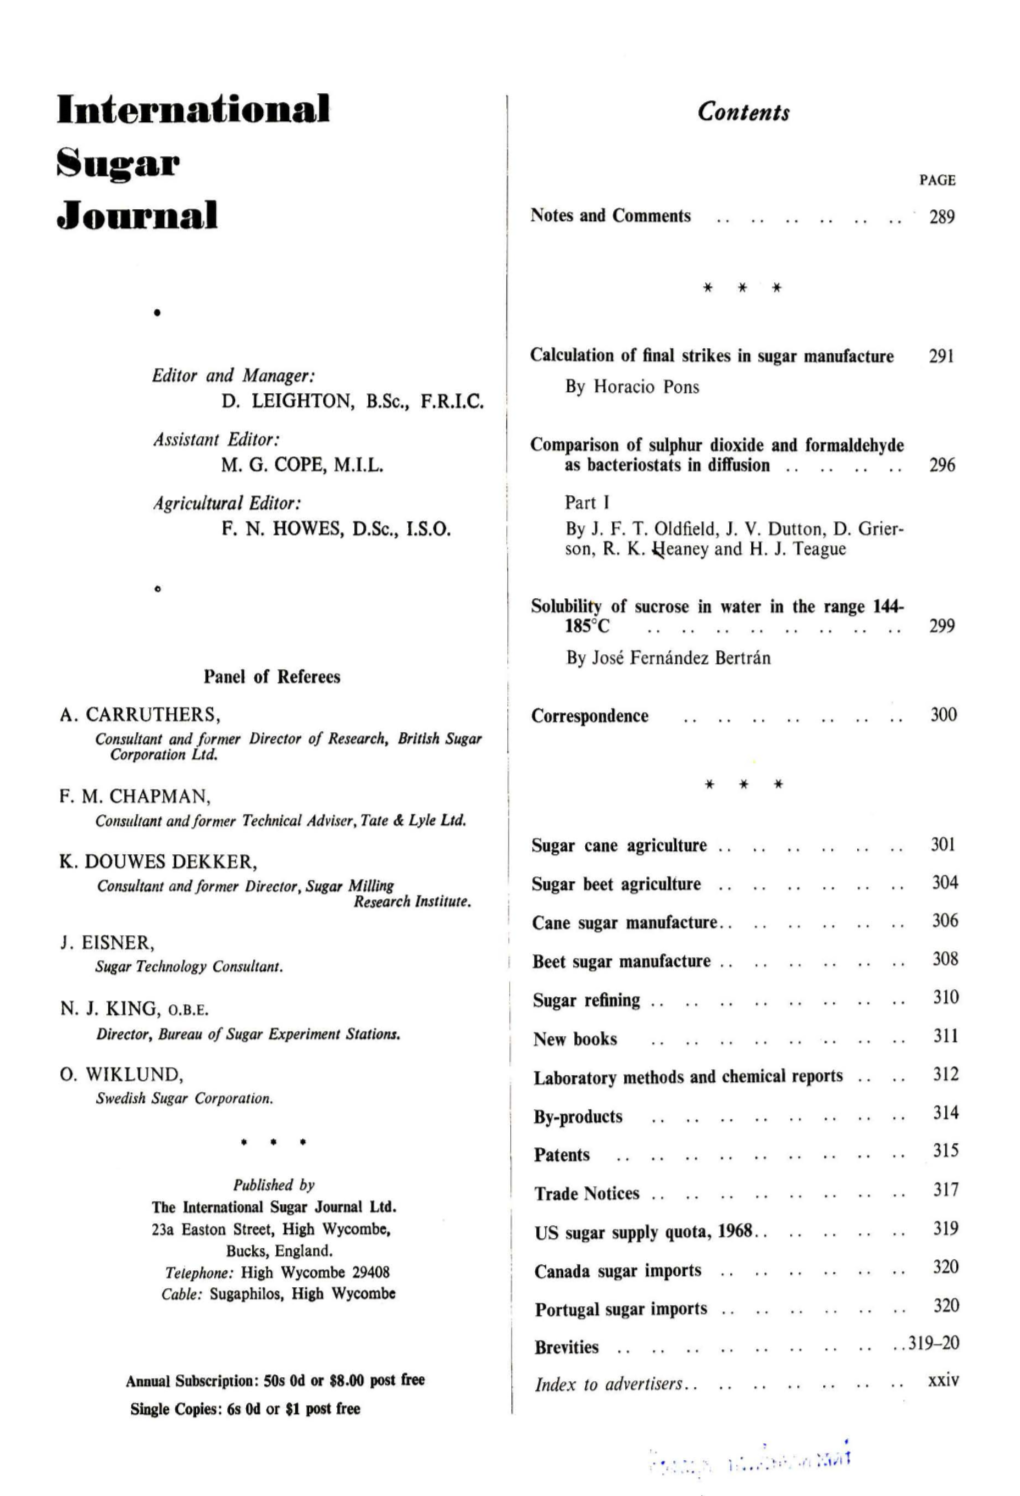 The International Sugar Journal 1968 Vol.70 No.838